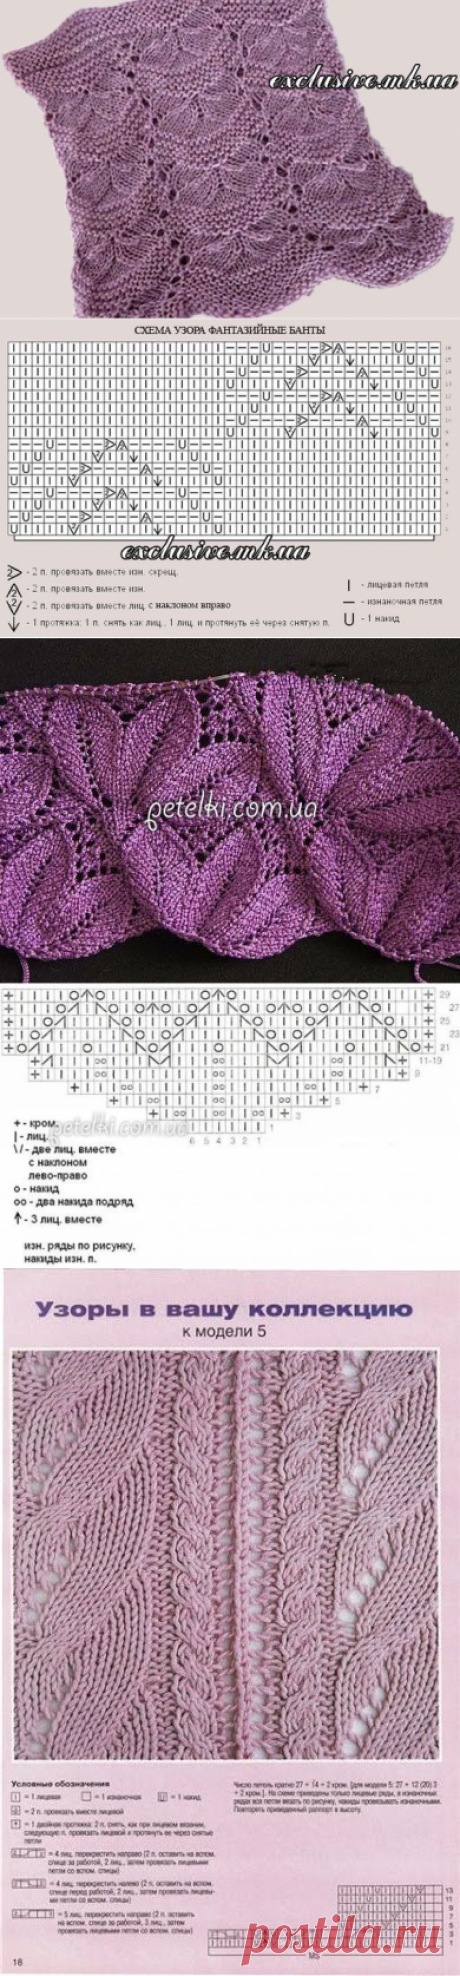 30 узоров спицами в сиреневом цвете | Вязание, рукоделие, хобби | Яндекс Дзен